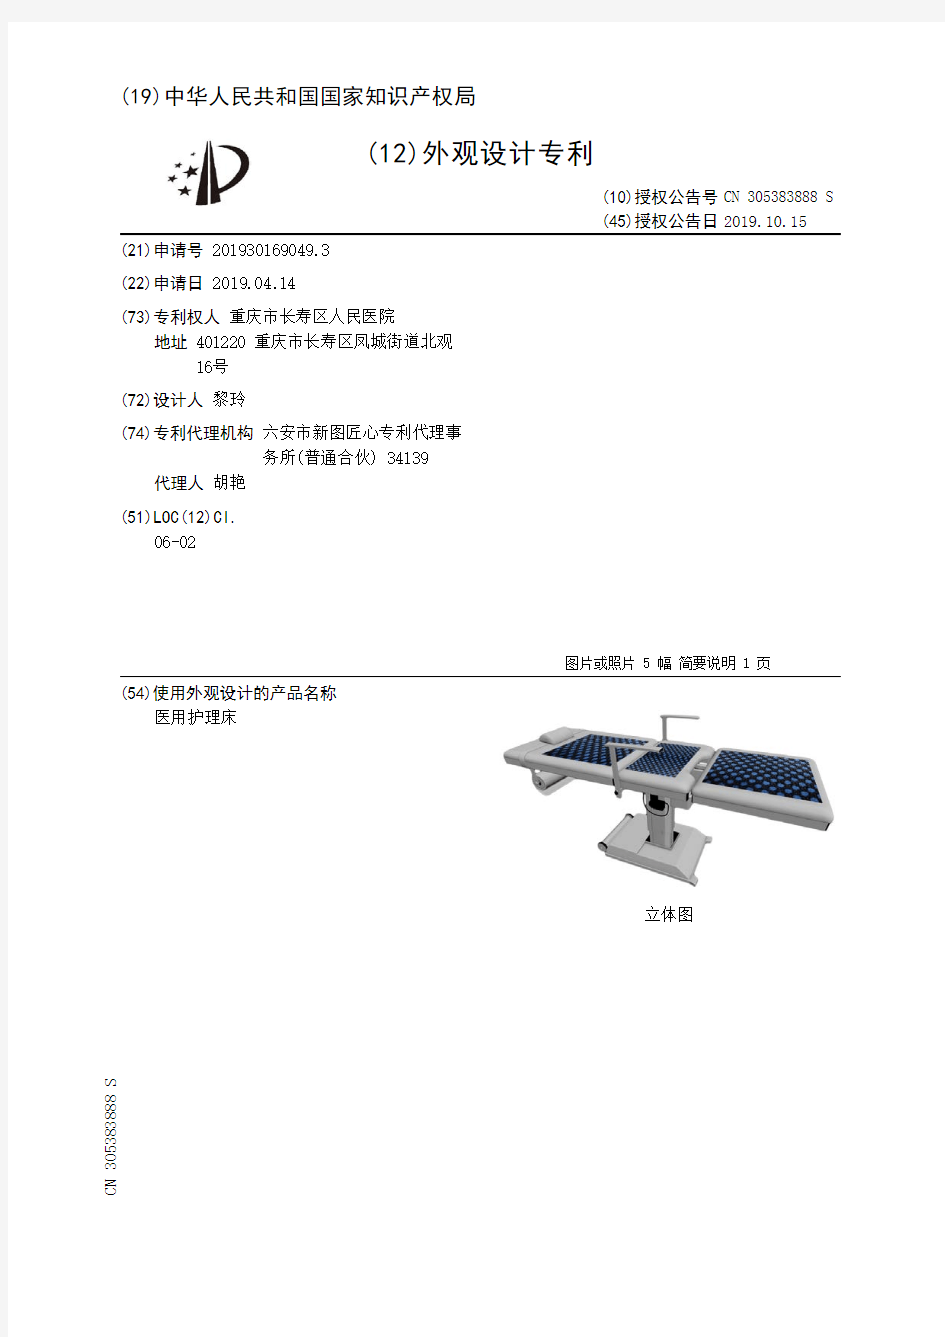 【CN305383888S】医用护理床【专利】